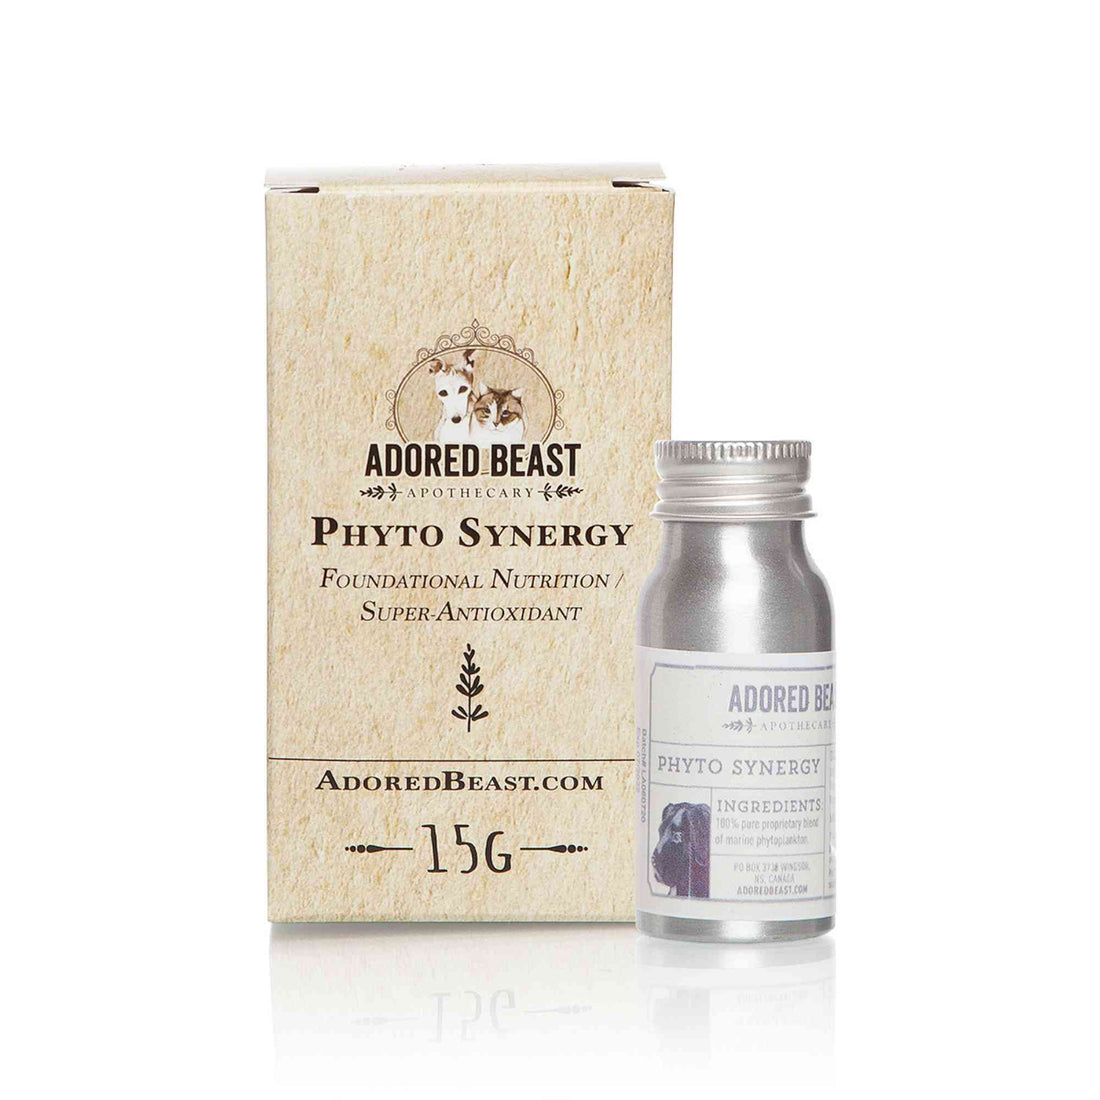 Phyto Synergy 15g Adored Beast Super Antioxidant